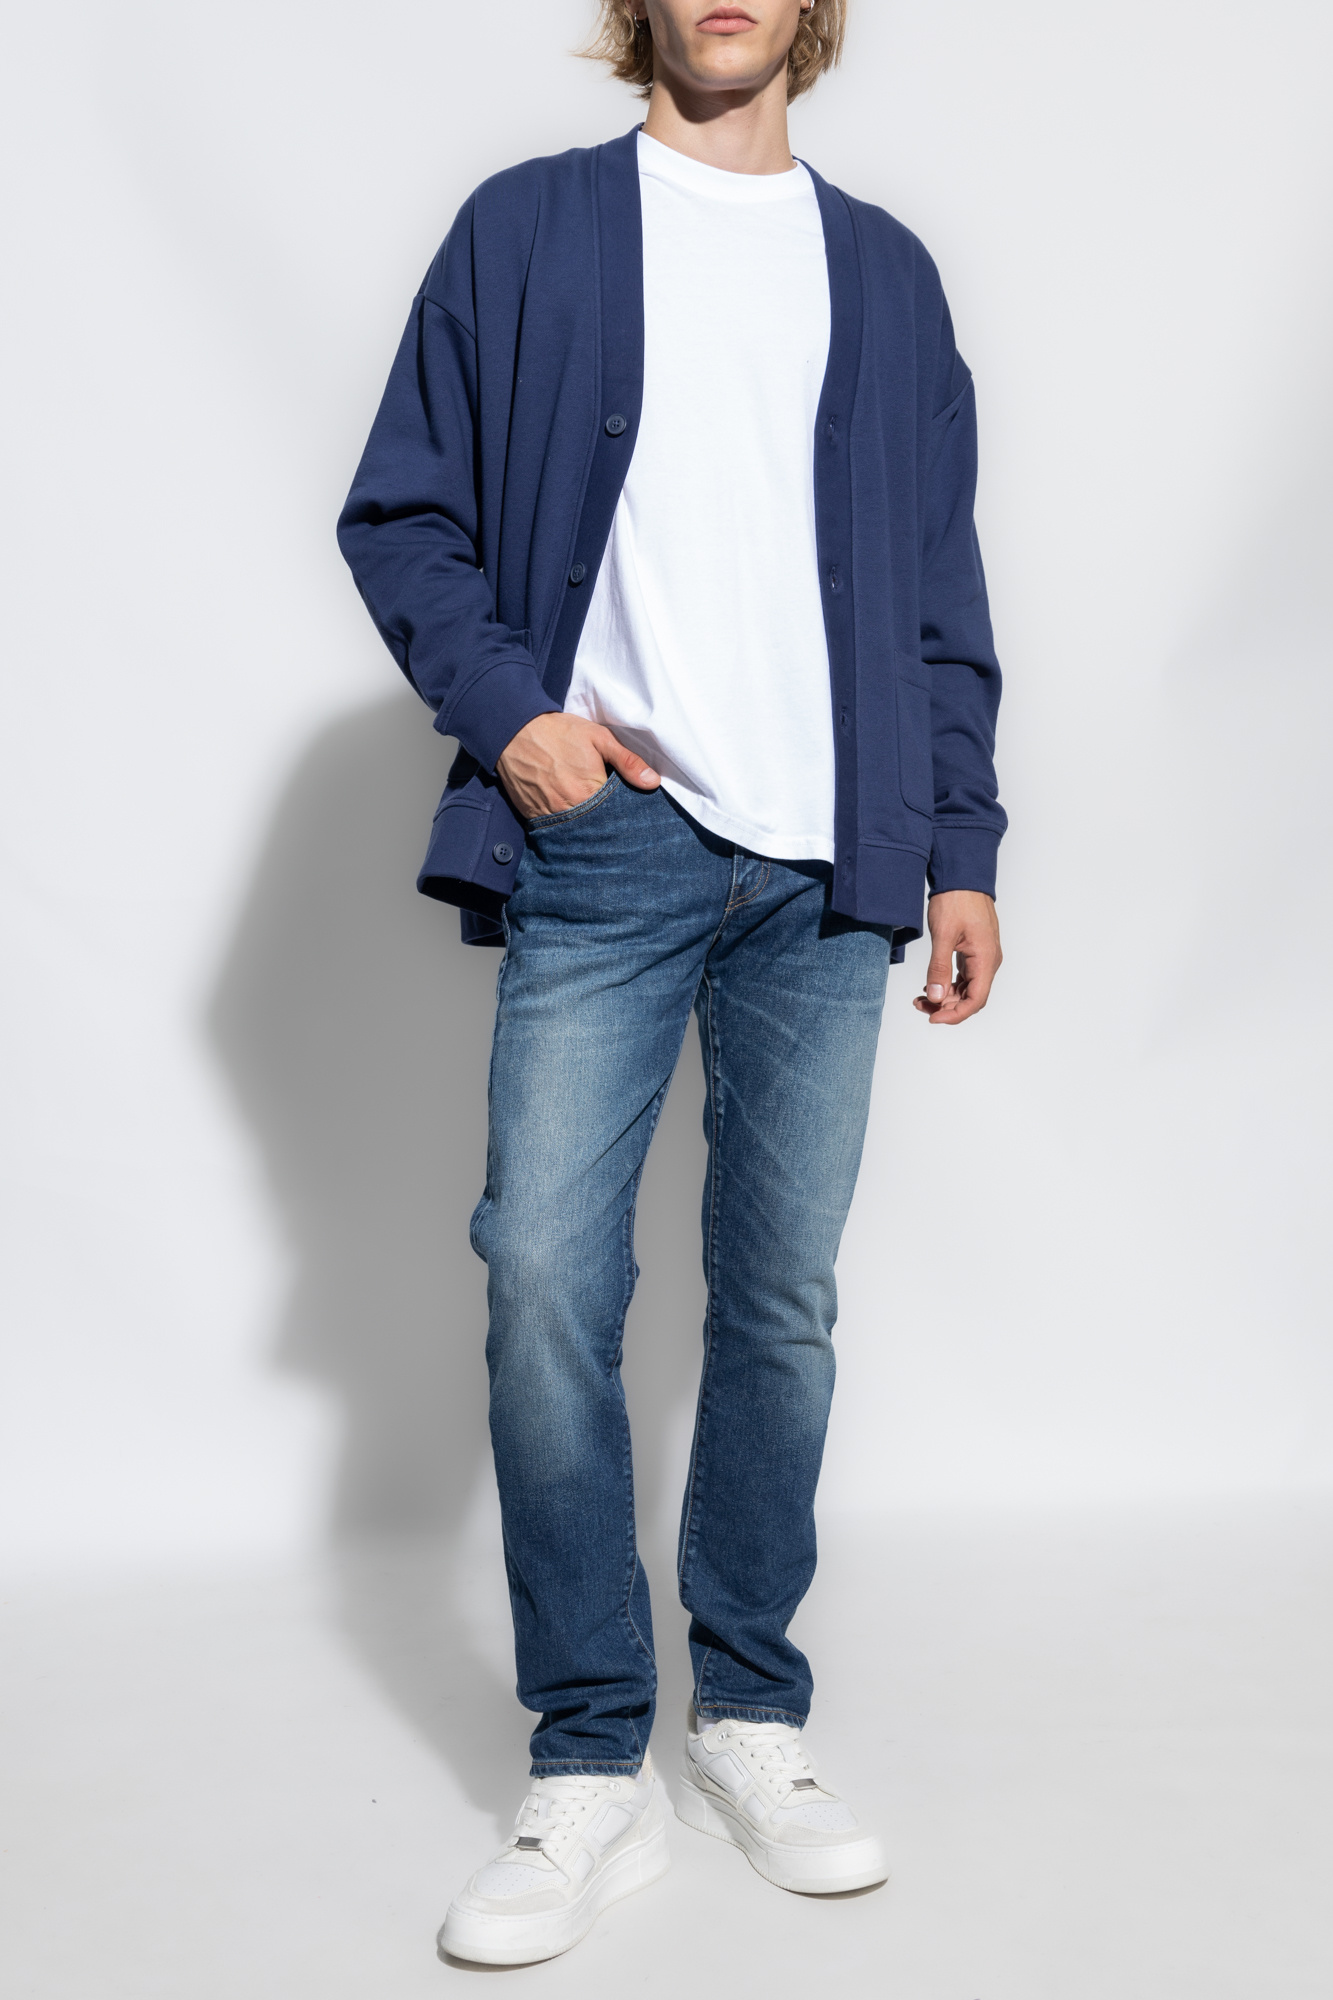 GenesinlifeShops Japan - Navy blue '511' jeans Levi's - Liquor N 